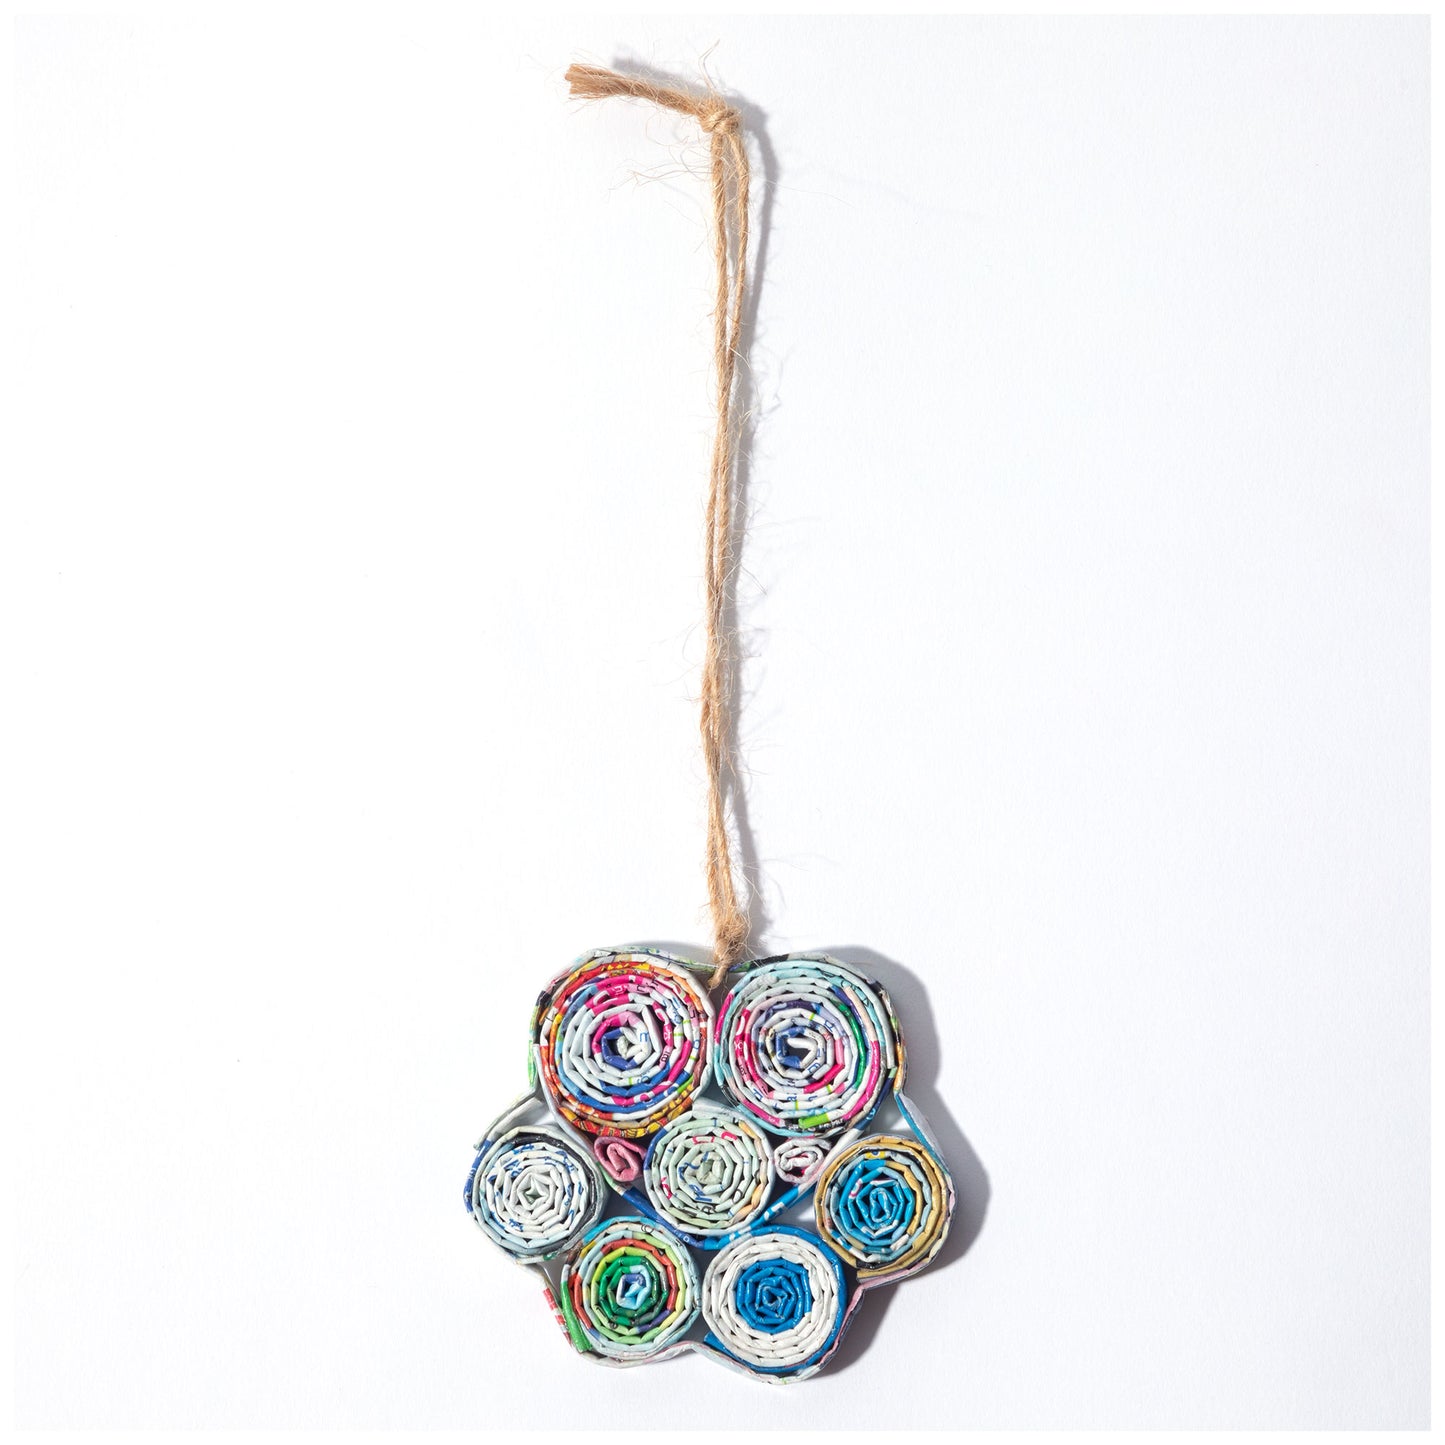 Recycled Magazine Furry Friend Ornament | Handmade, Fair Trade